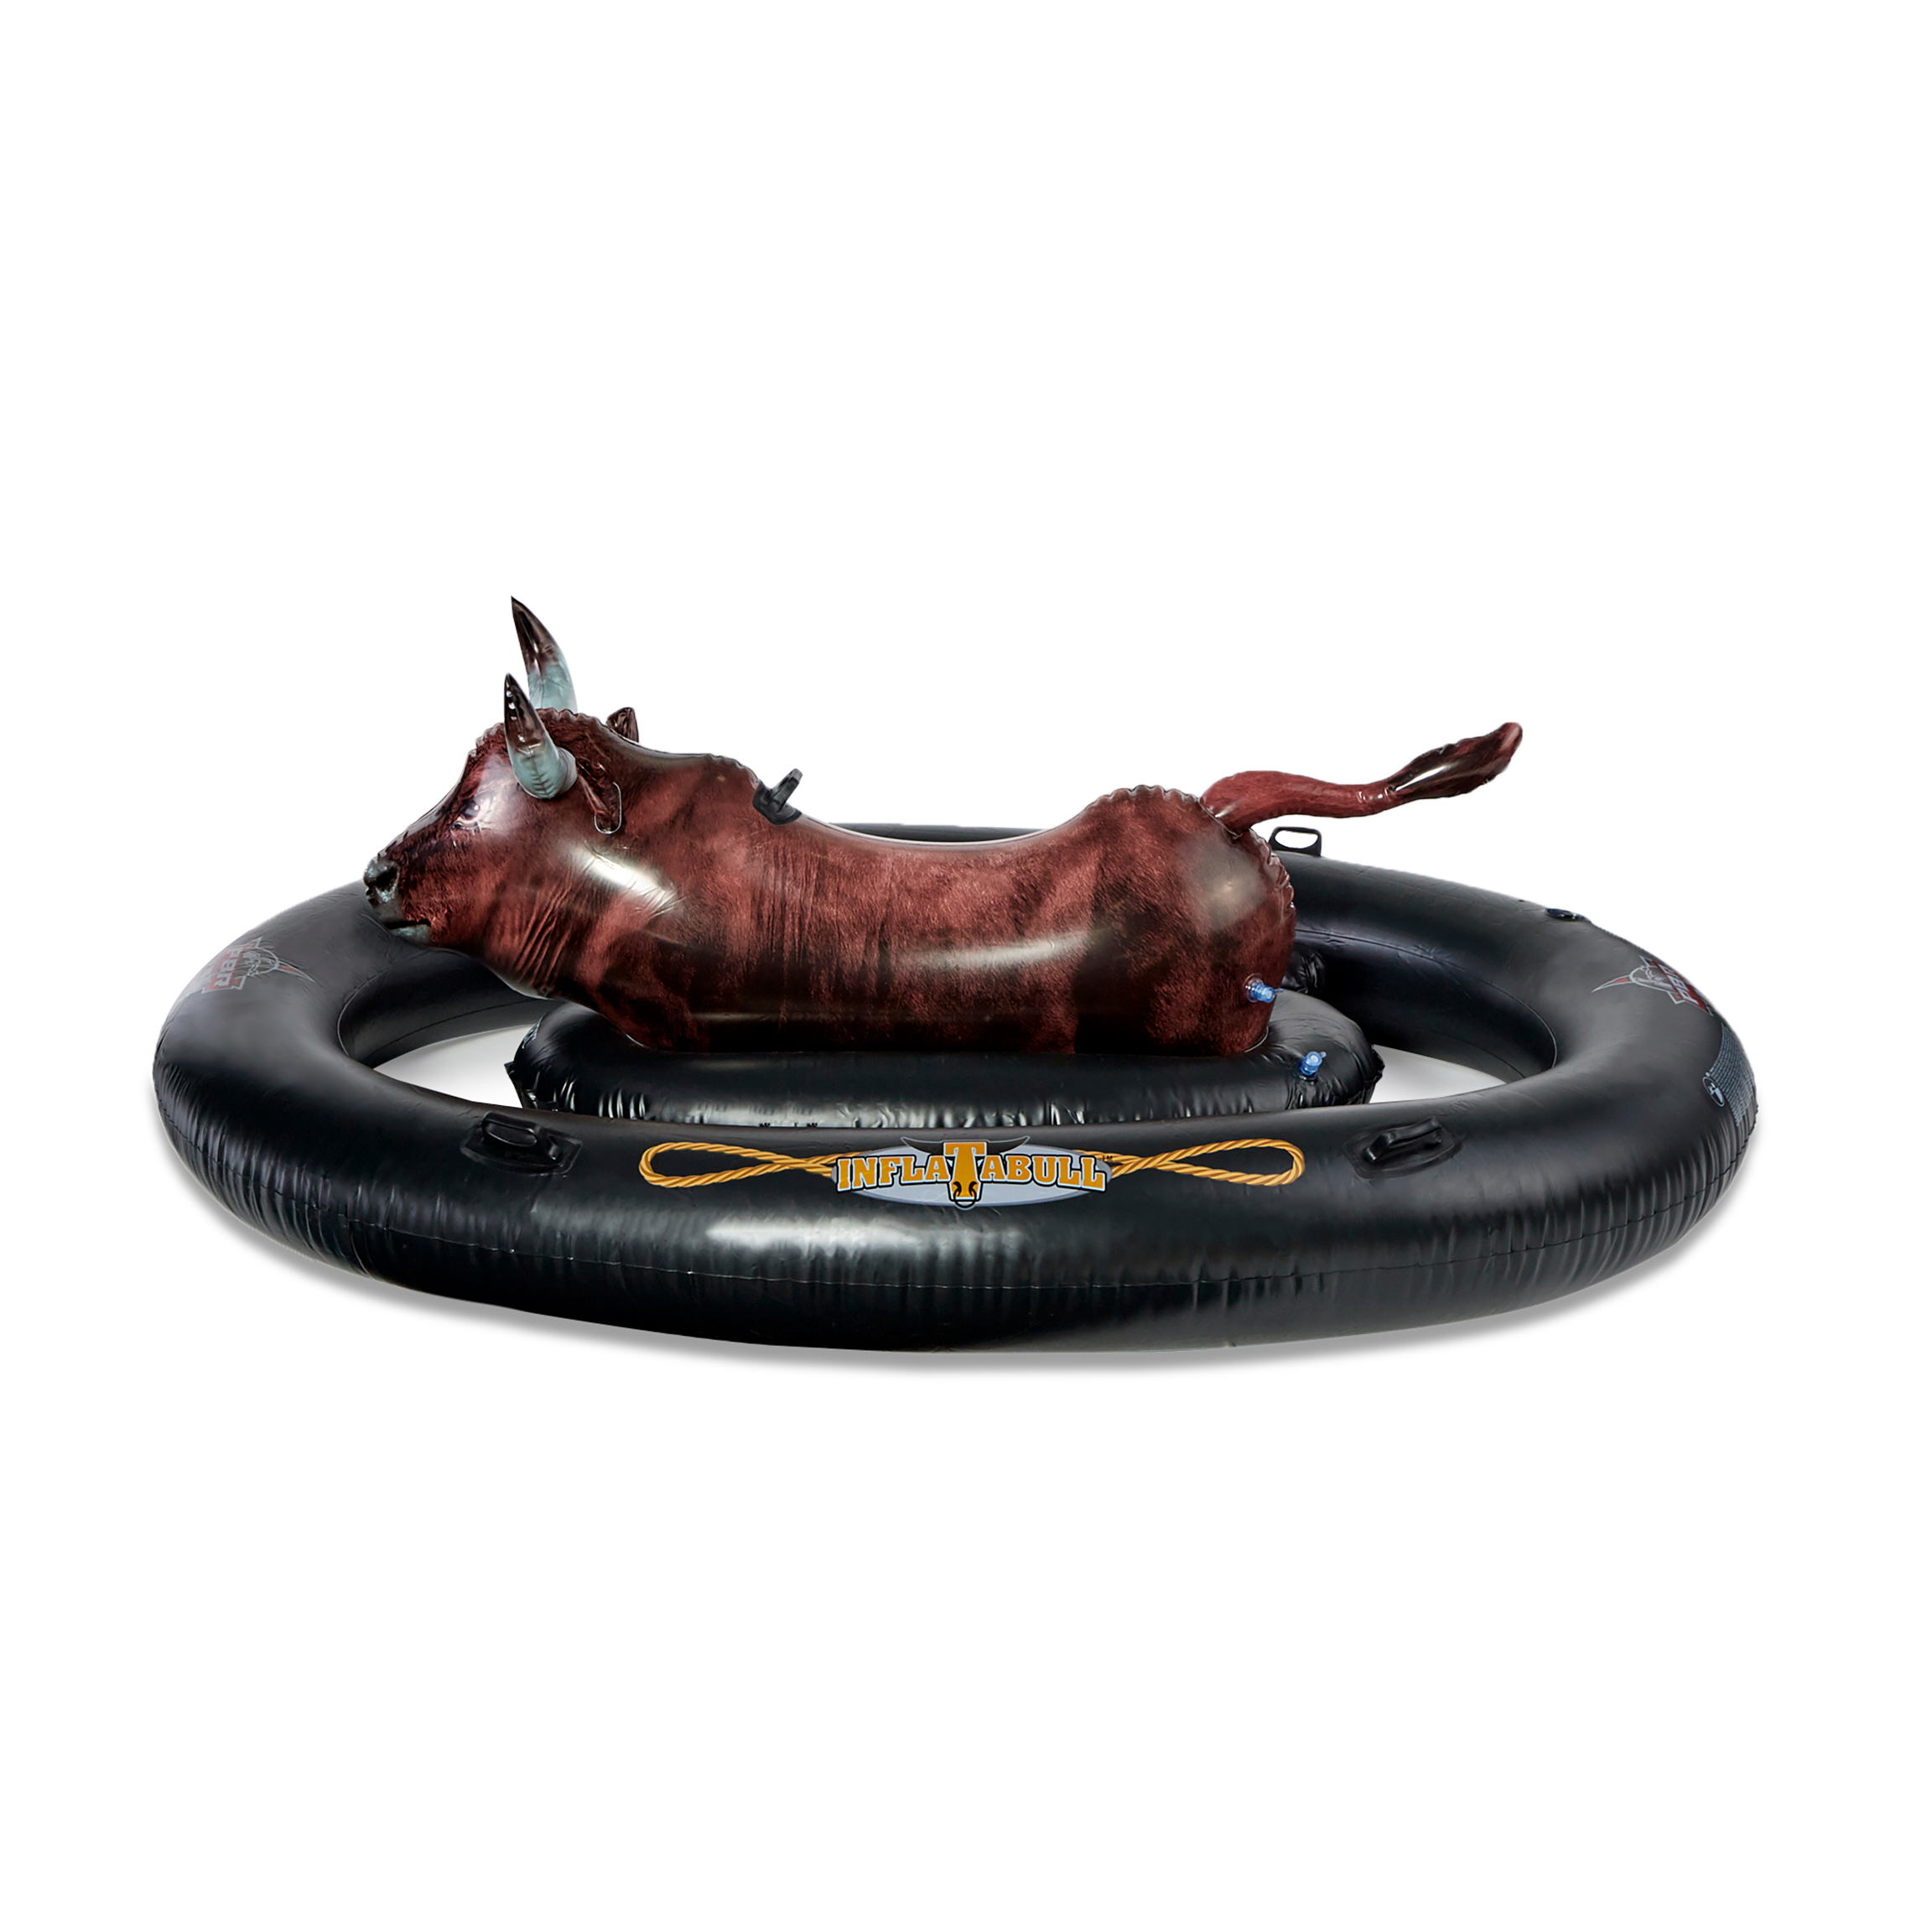 Intex PBR Inflatabull Bull-Riding Giant Inflatable Swimming Pool Lake Fun Float - image 2 of 6